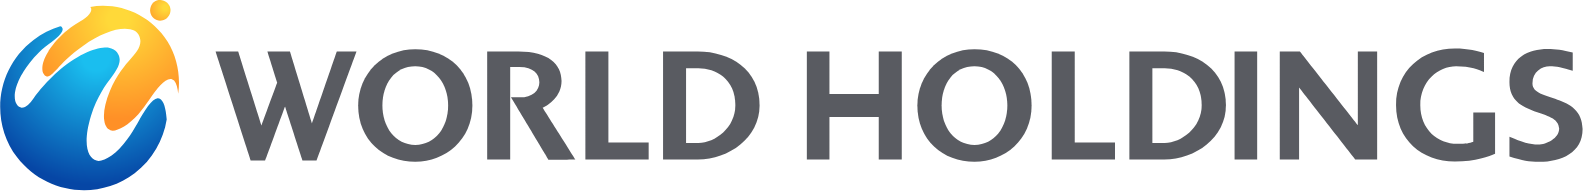 World Holdings logo large (transparent PNG)